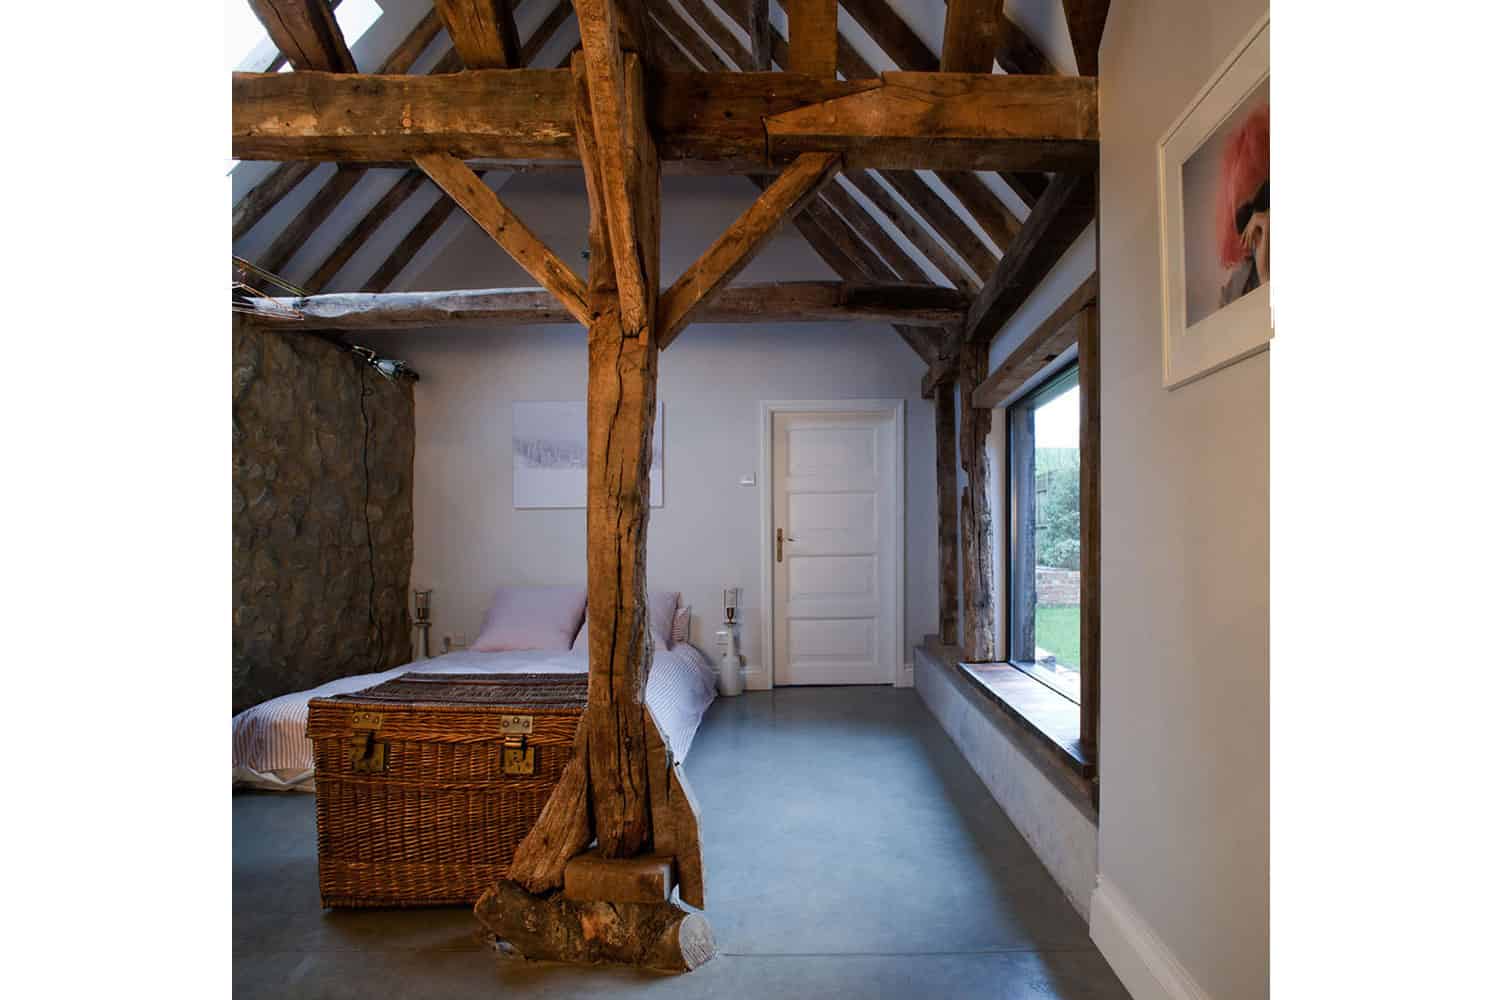 19 18th century barn converted modern home